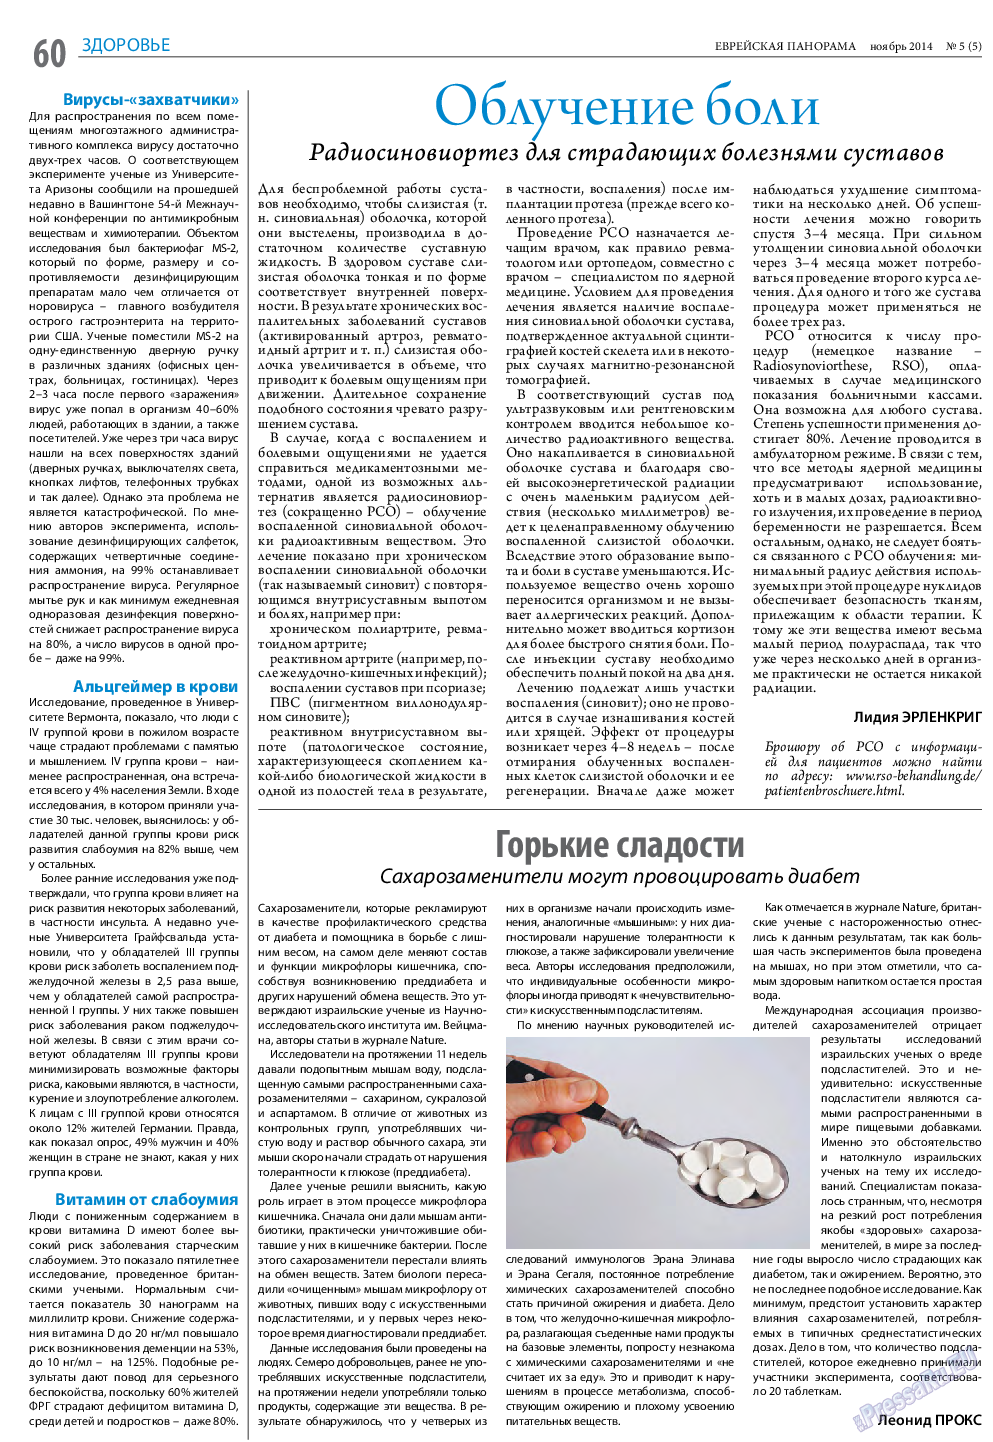 Еврейская панорама, газета. 2014 №5 стр.60